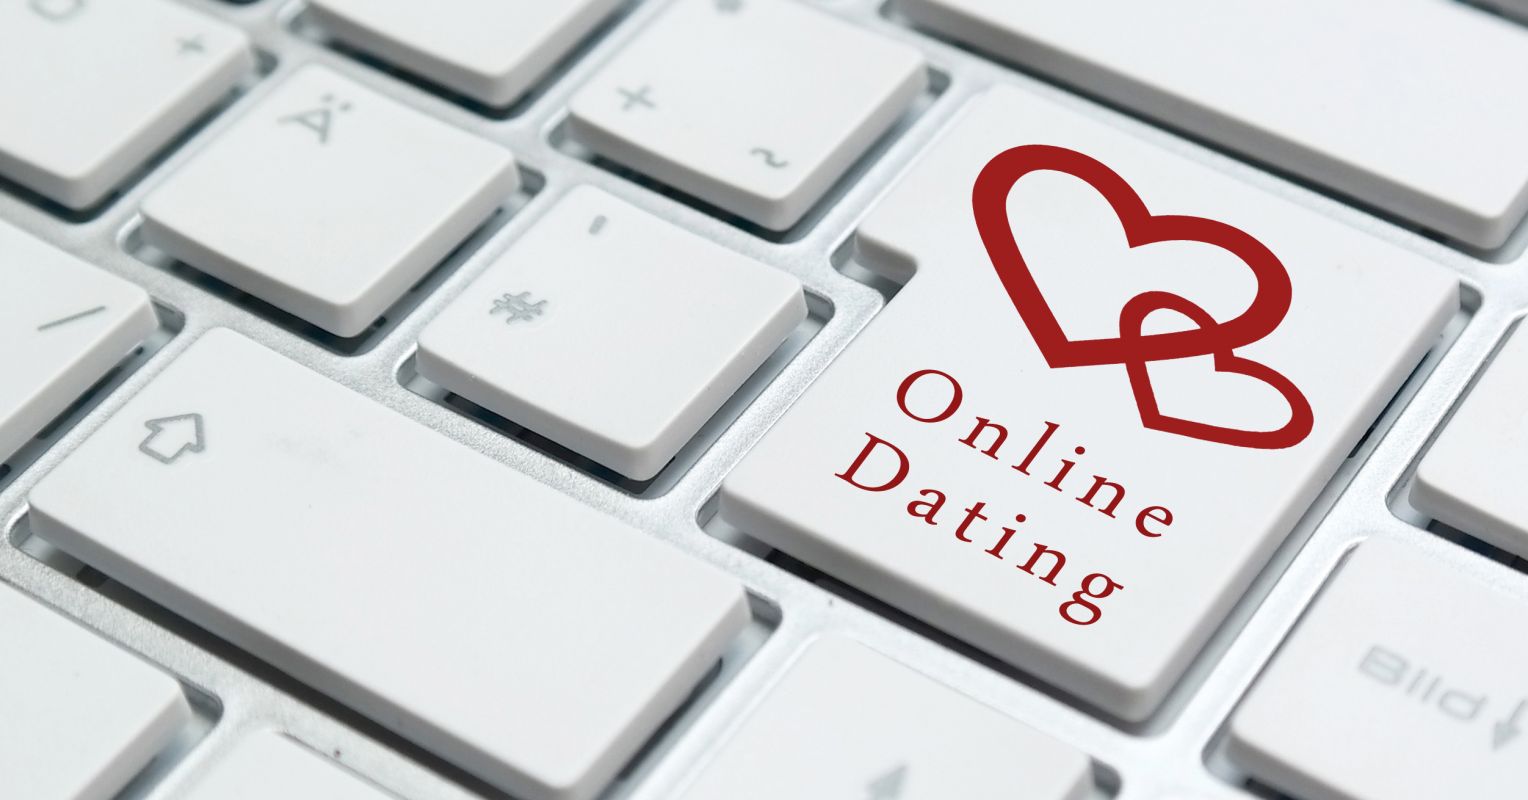 Online Dating - Teens' Experiences   Internet Matters